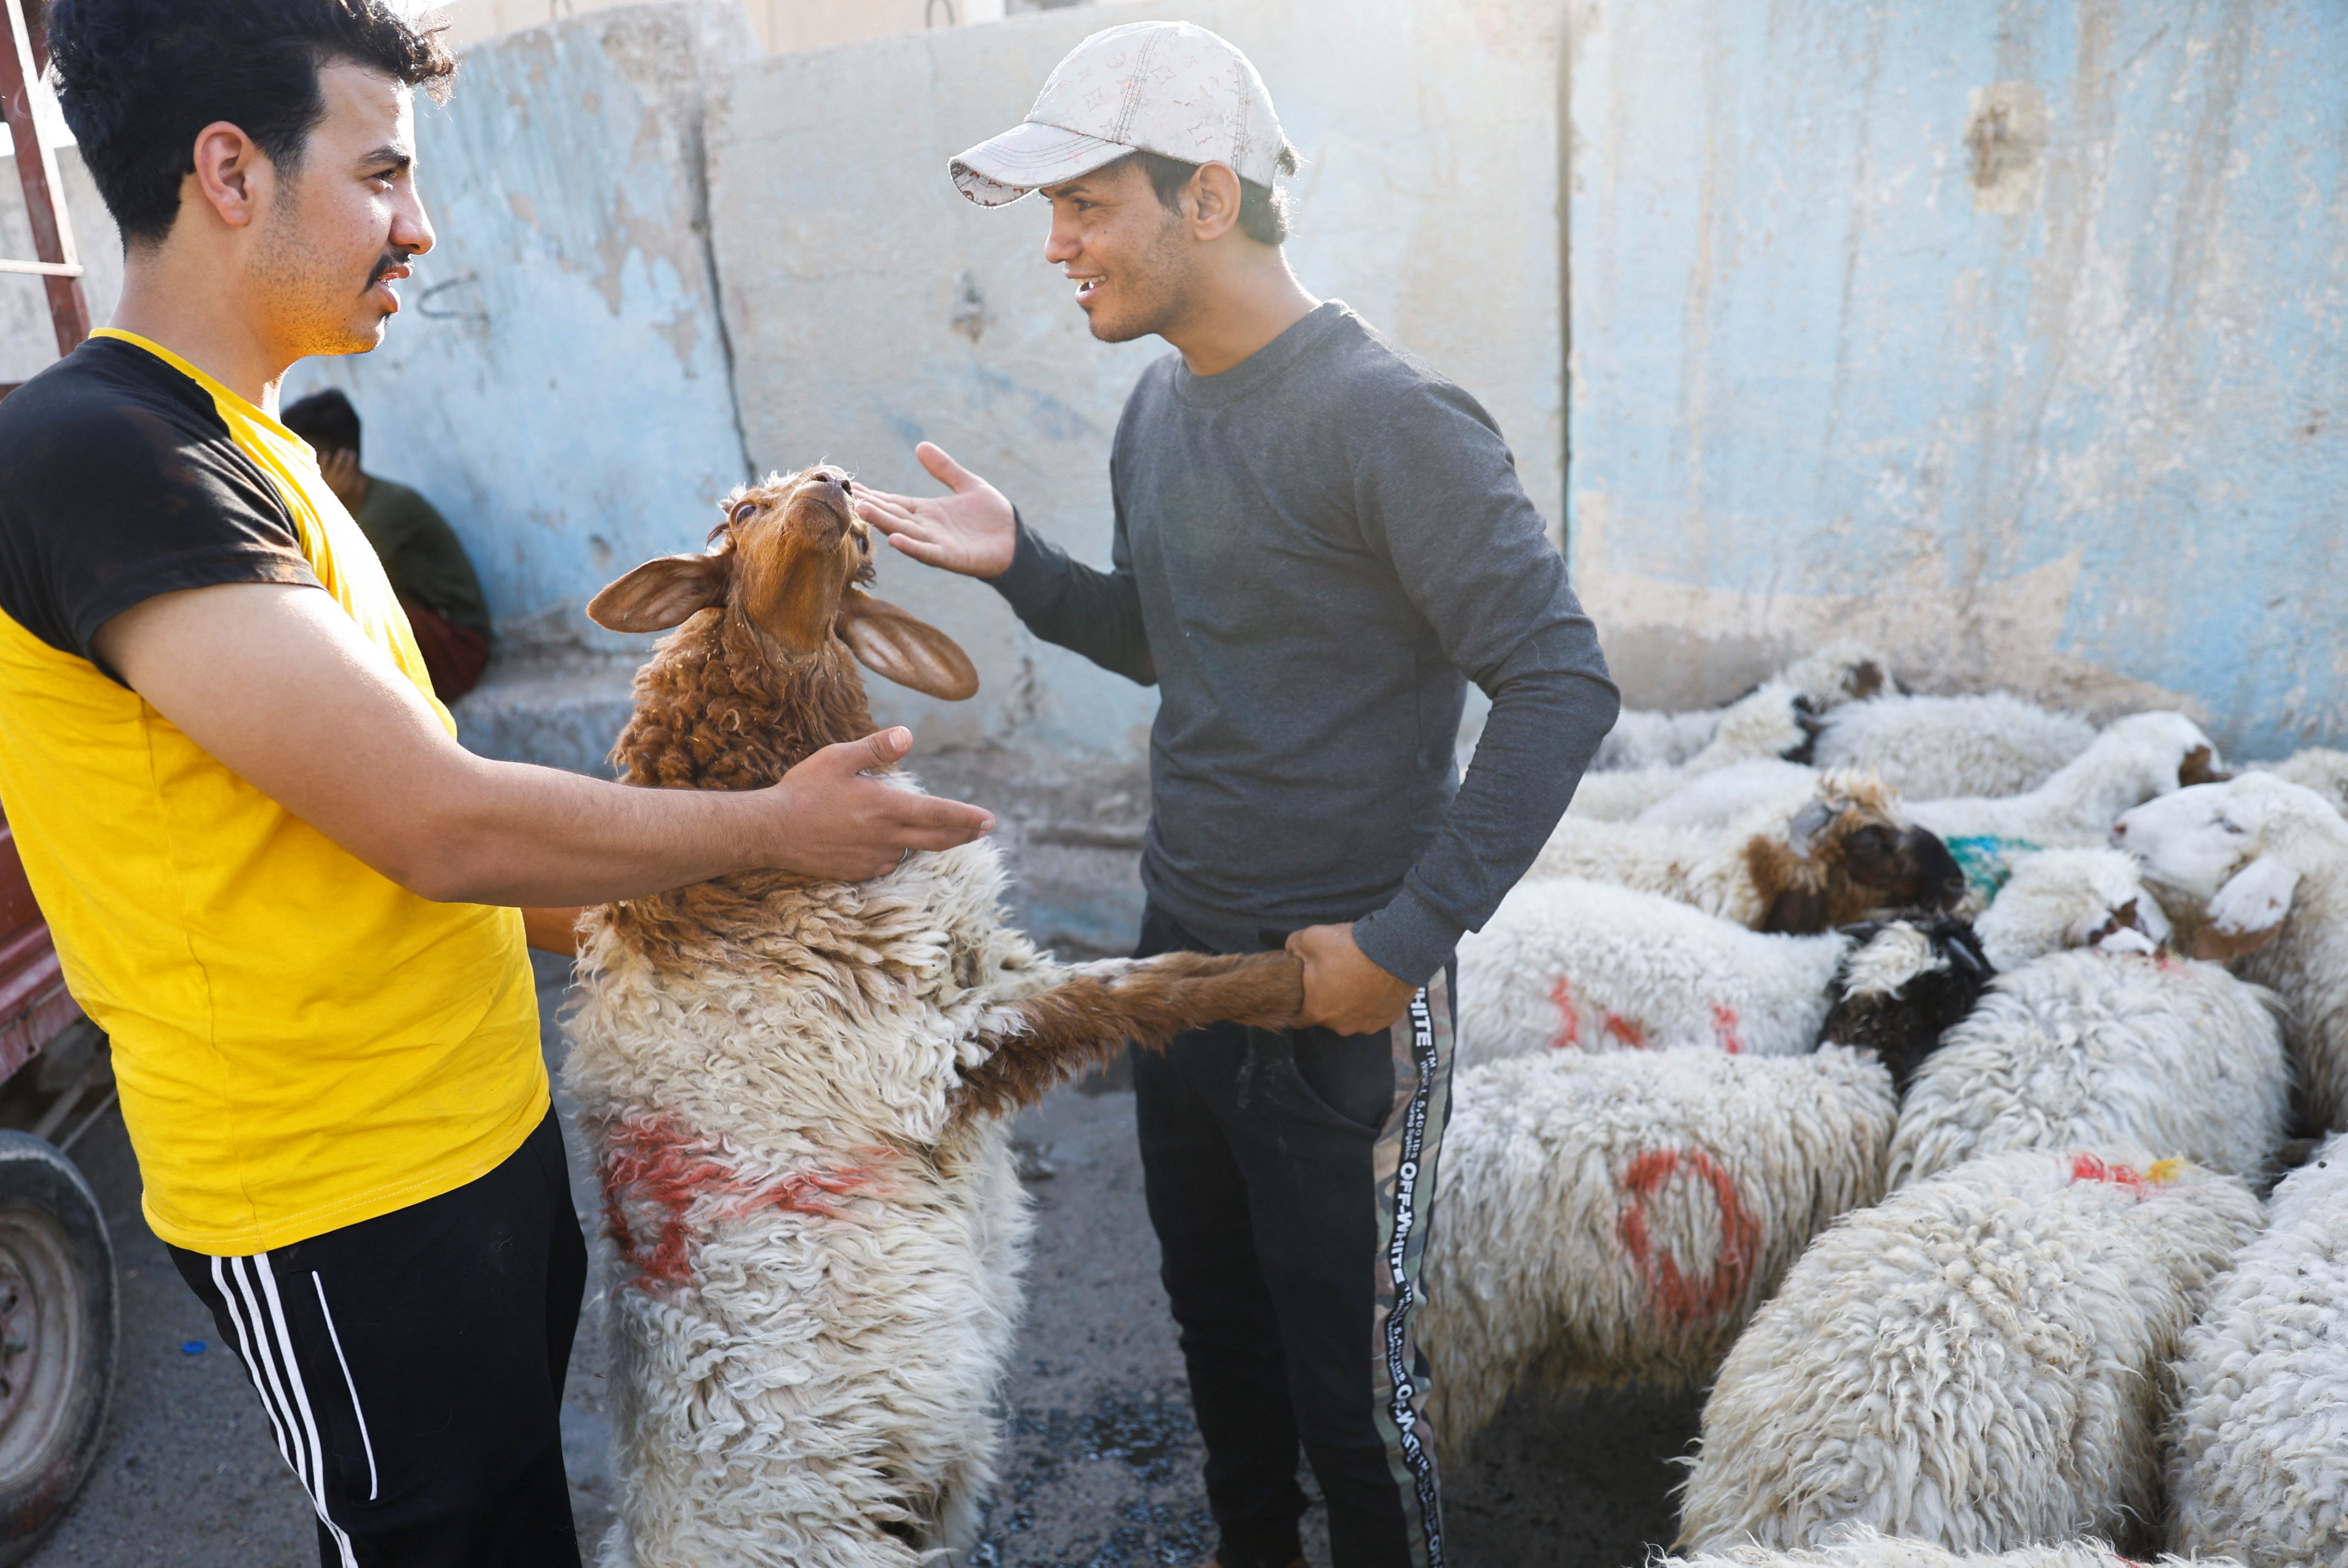 An Iraqi vendor shows a sacrificial sheep to a customer at a livestock market, ahead of the Eid al-Adha festival, in Baghdad,